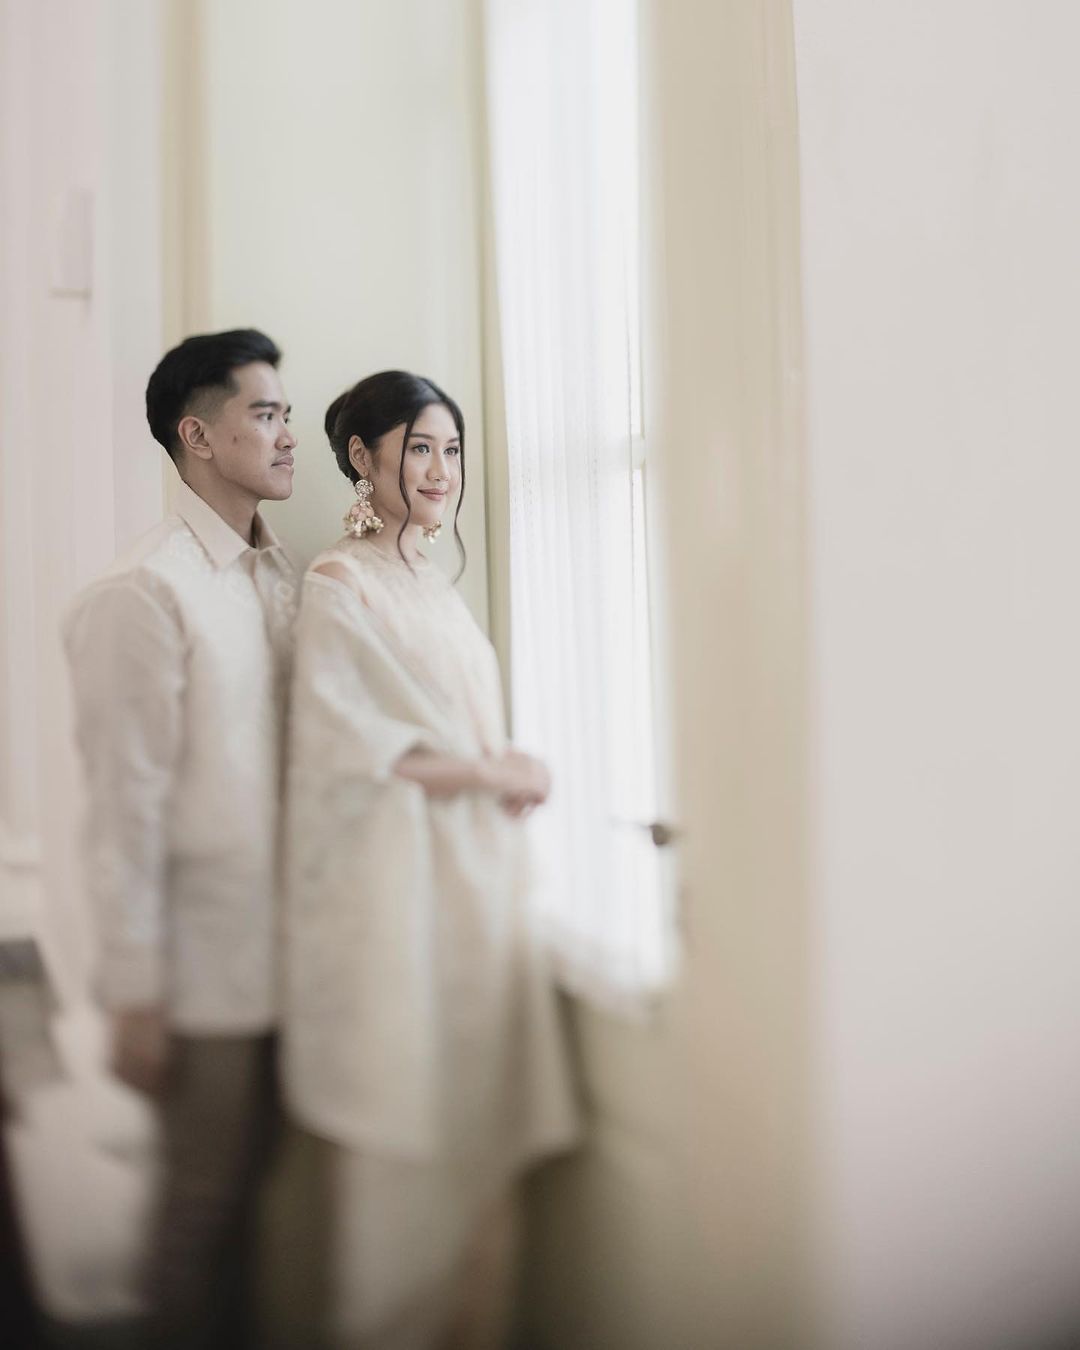 Potret Terbaru Prewedding Kaesang Pangarep dan Erina Gudono